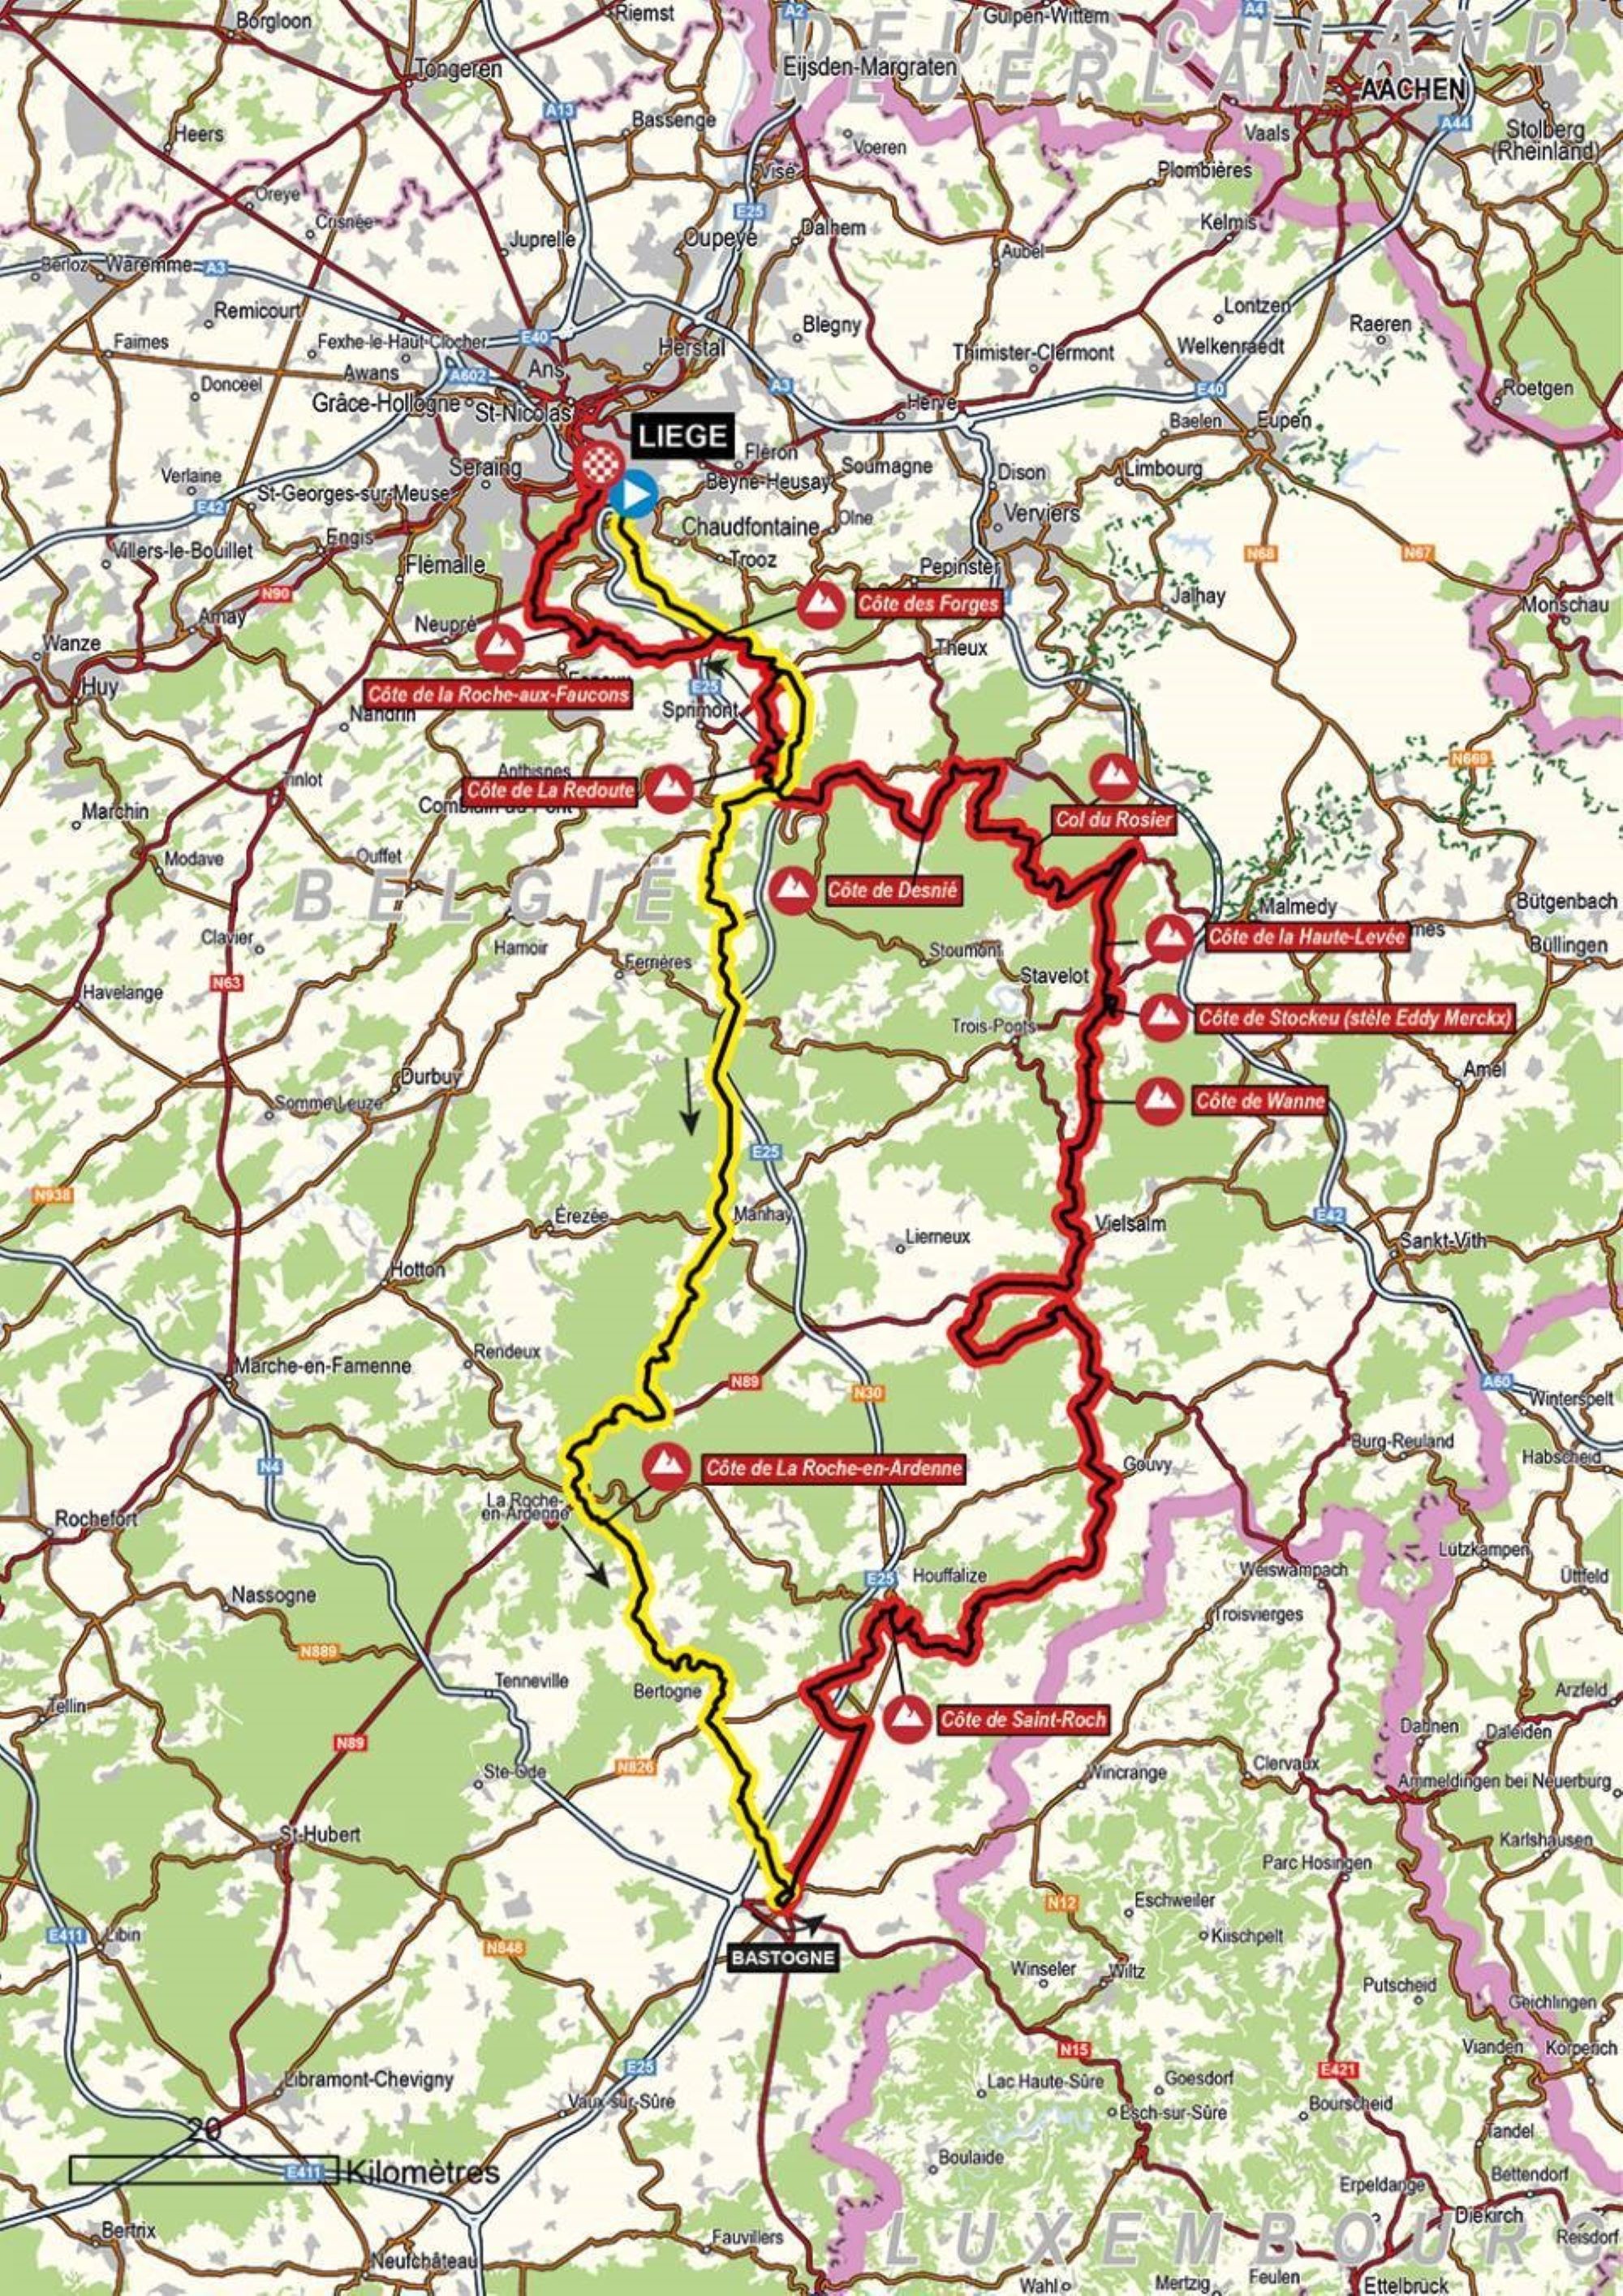 LiègeBastogneLiège 2023 Route information and start…